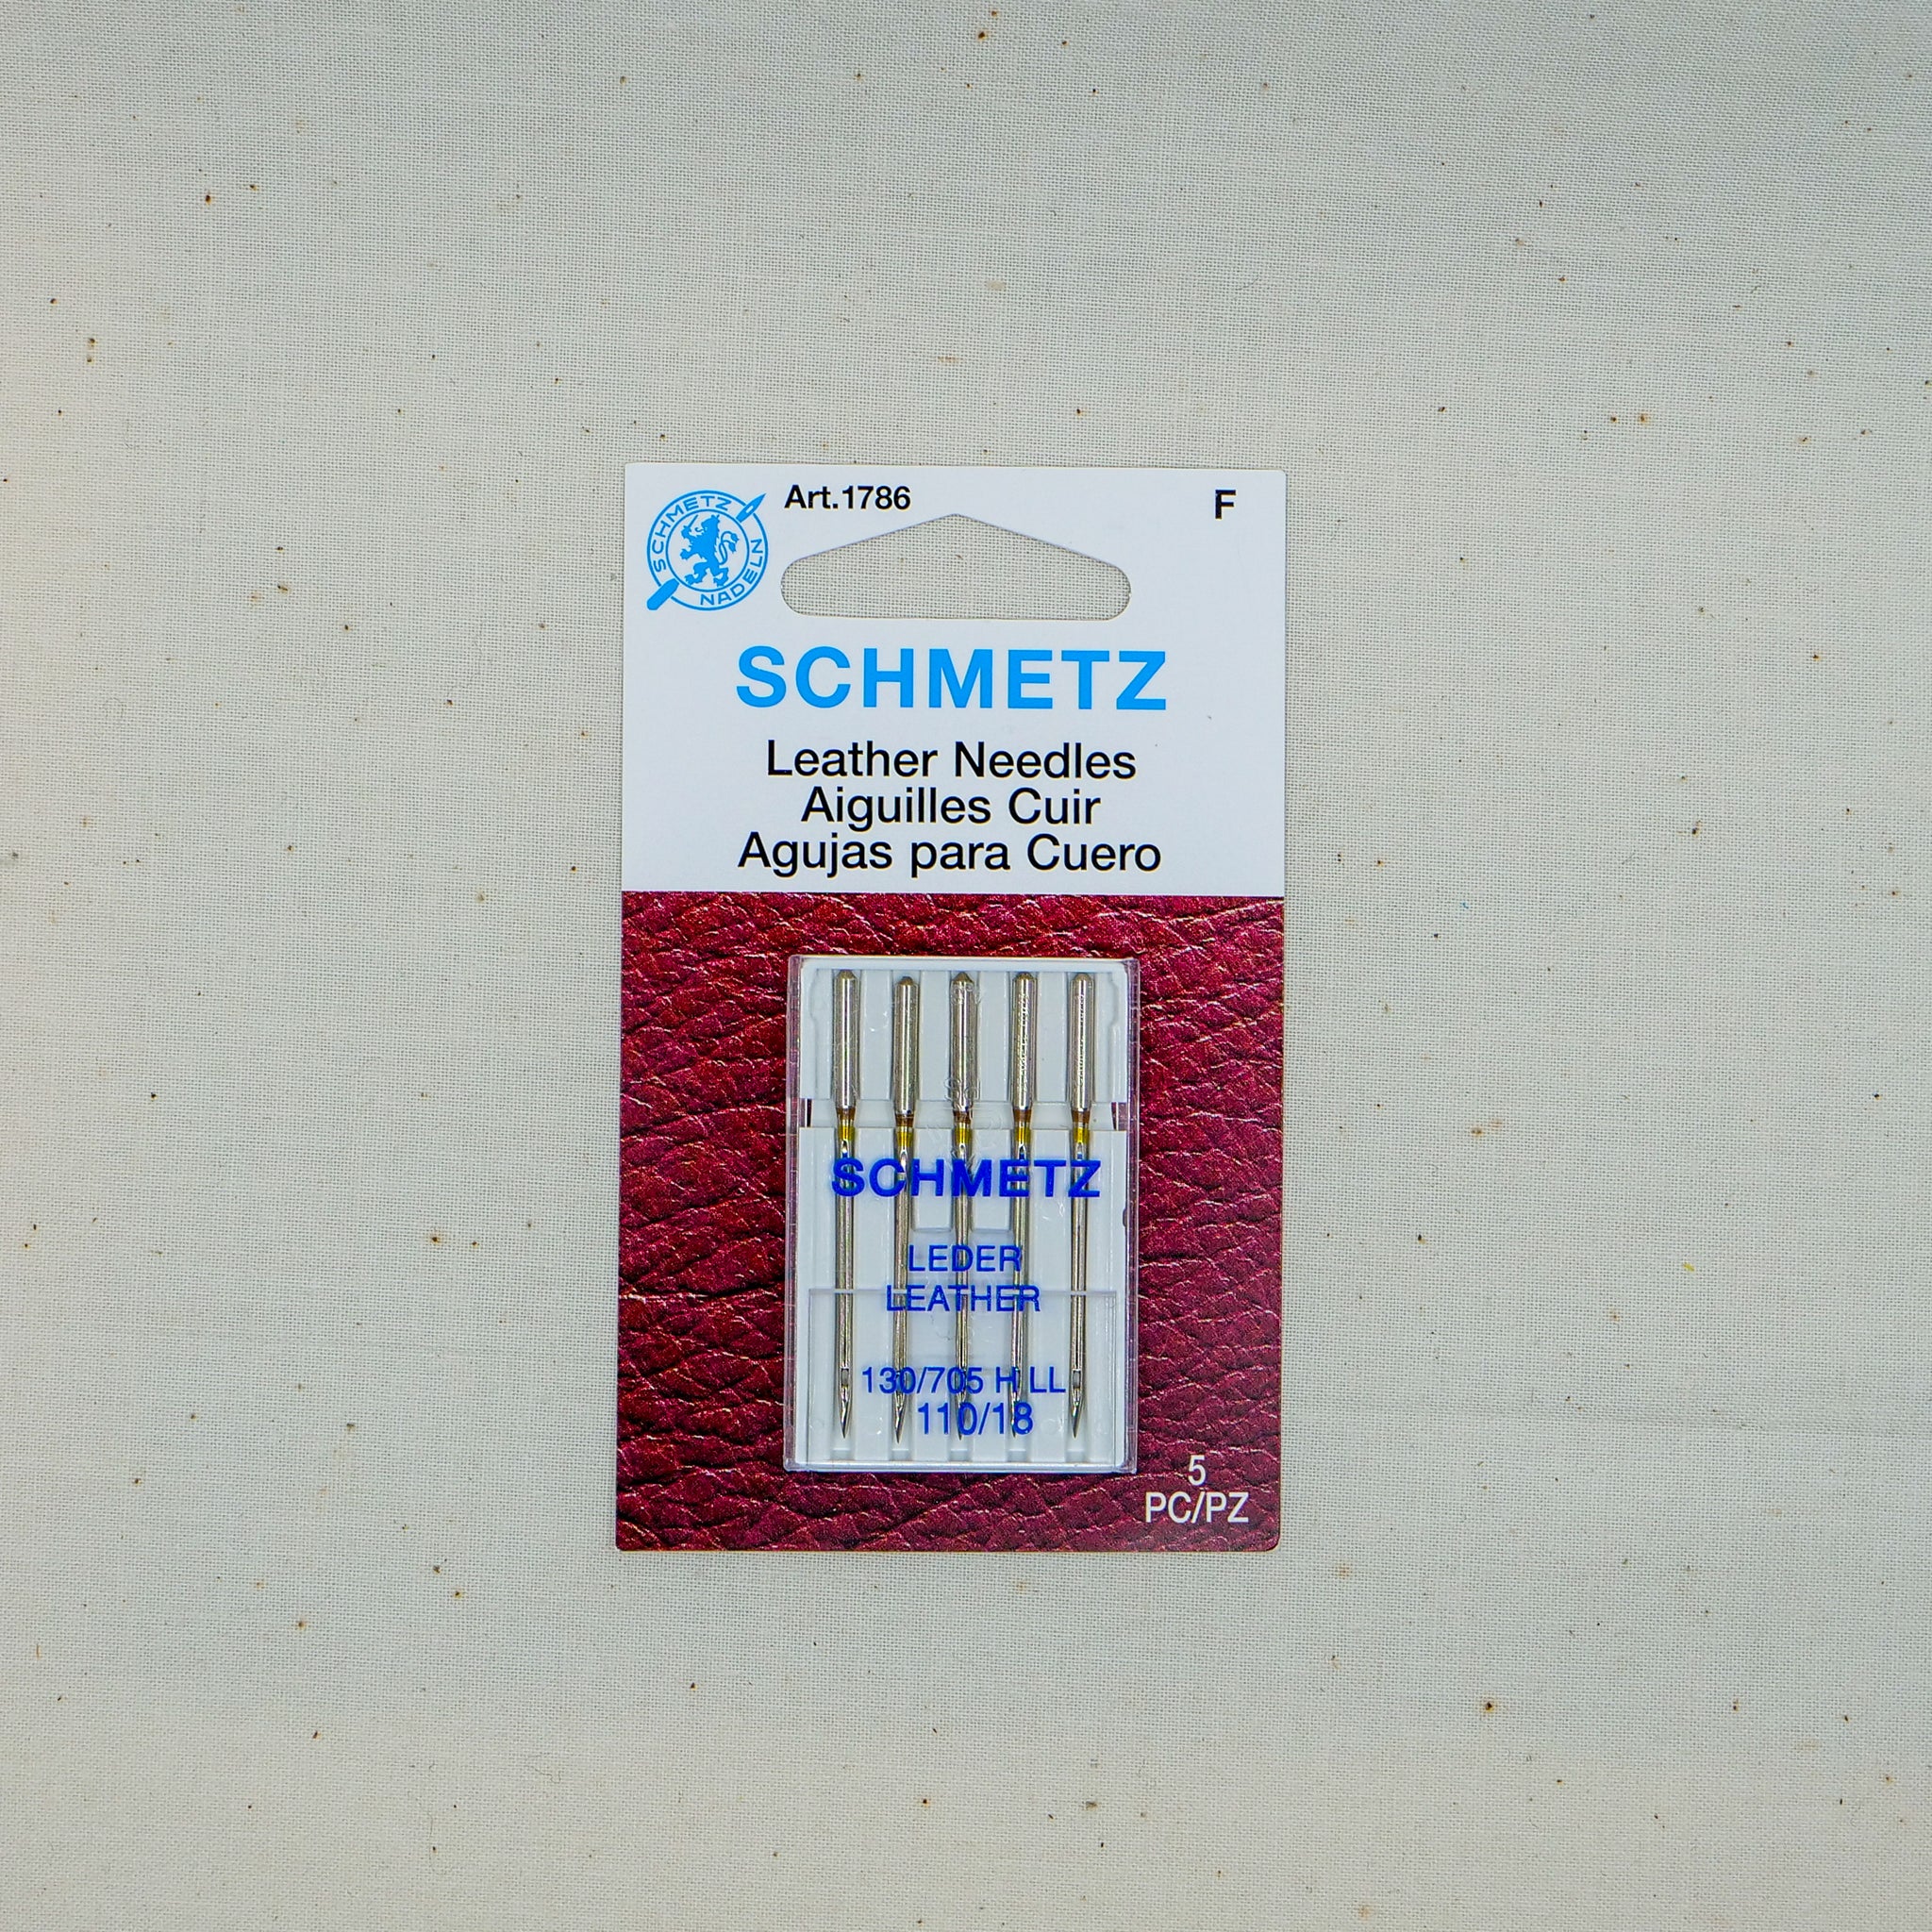 Schmetz Leather 110/18